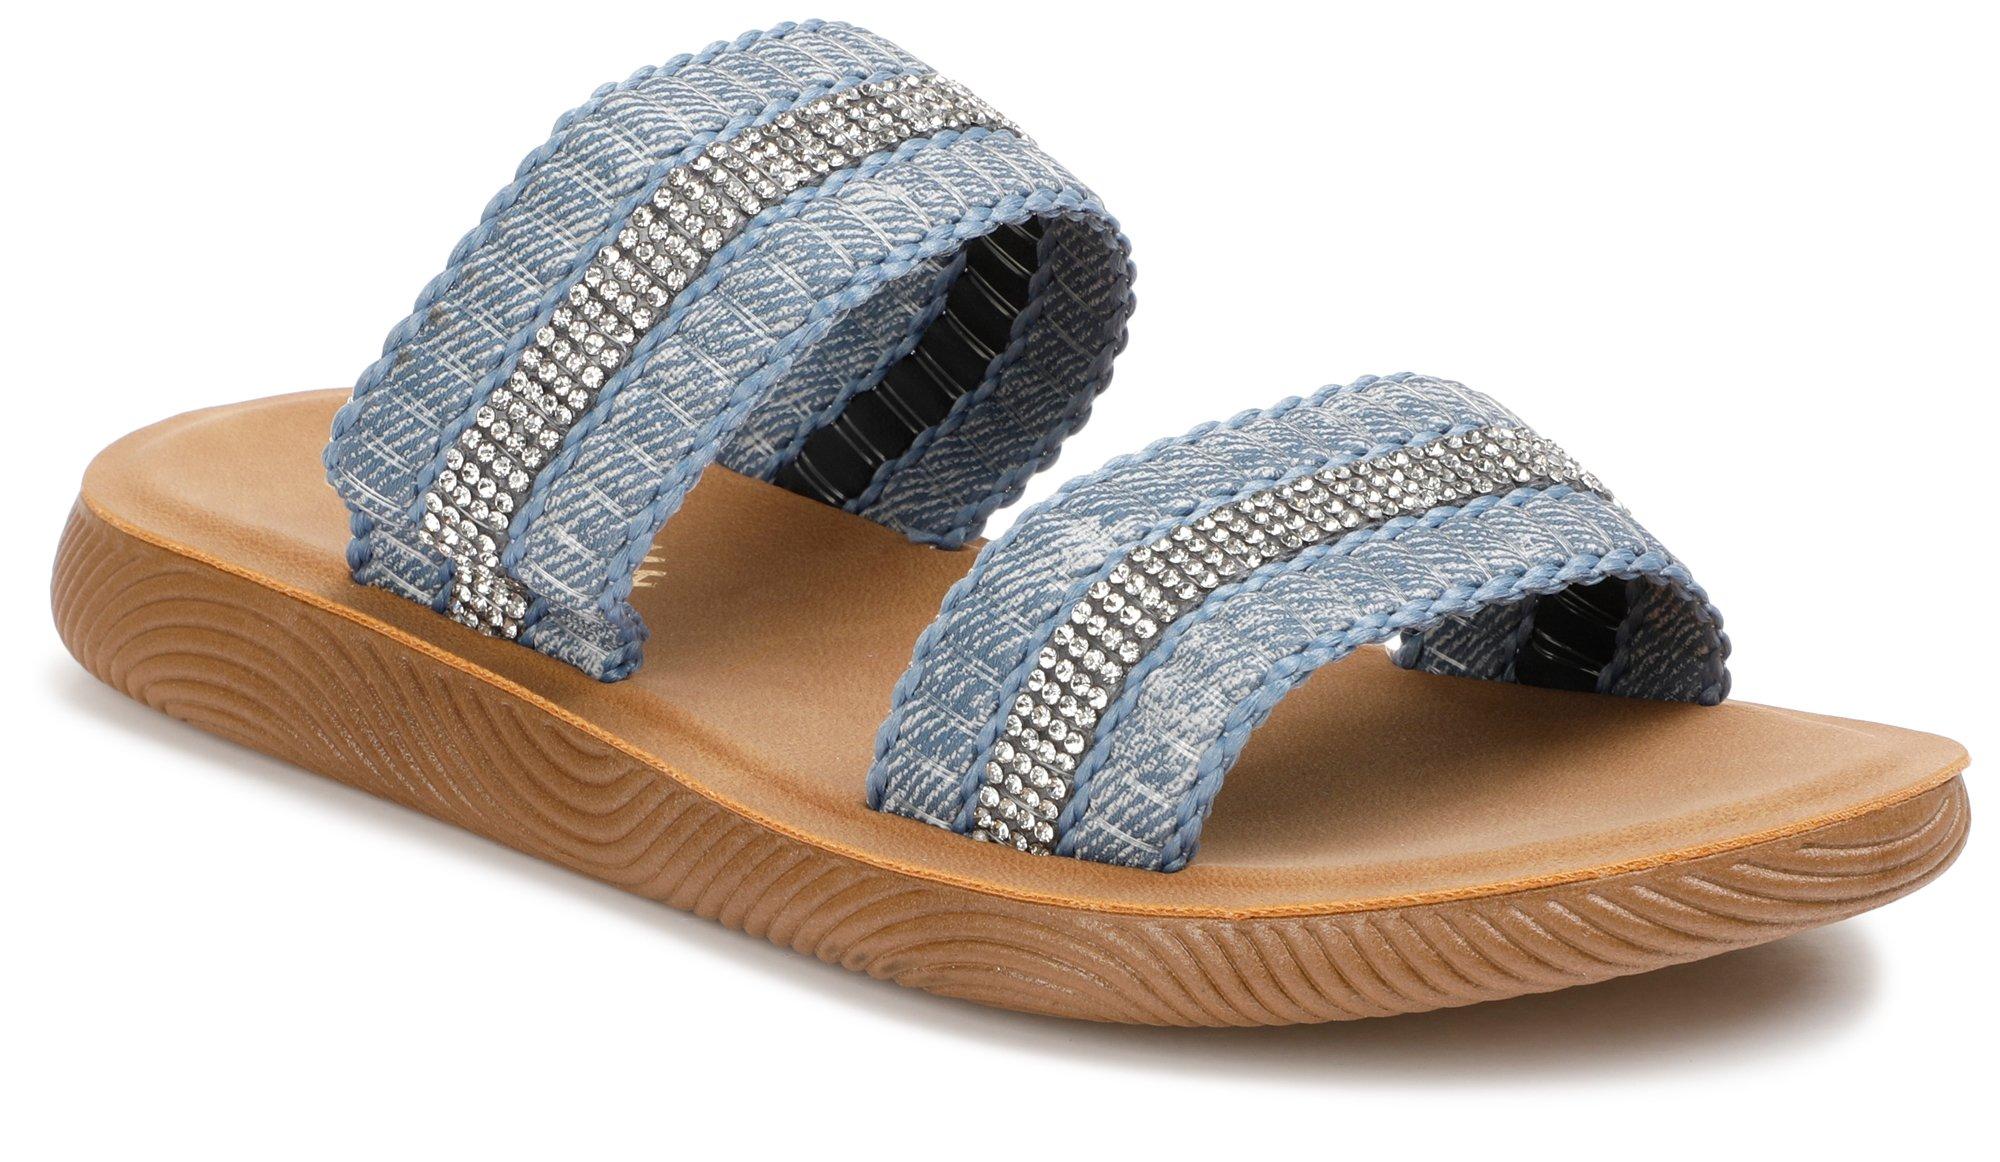 Girls Denim Slide Sandals